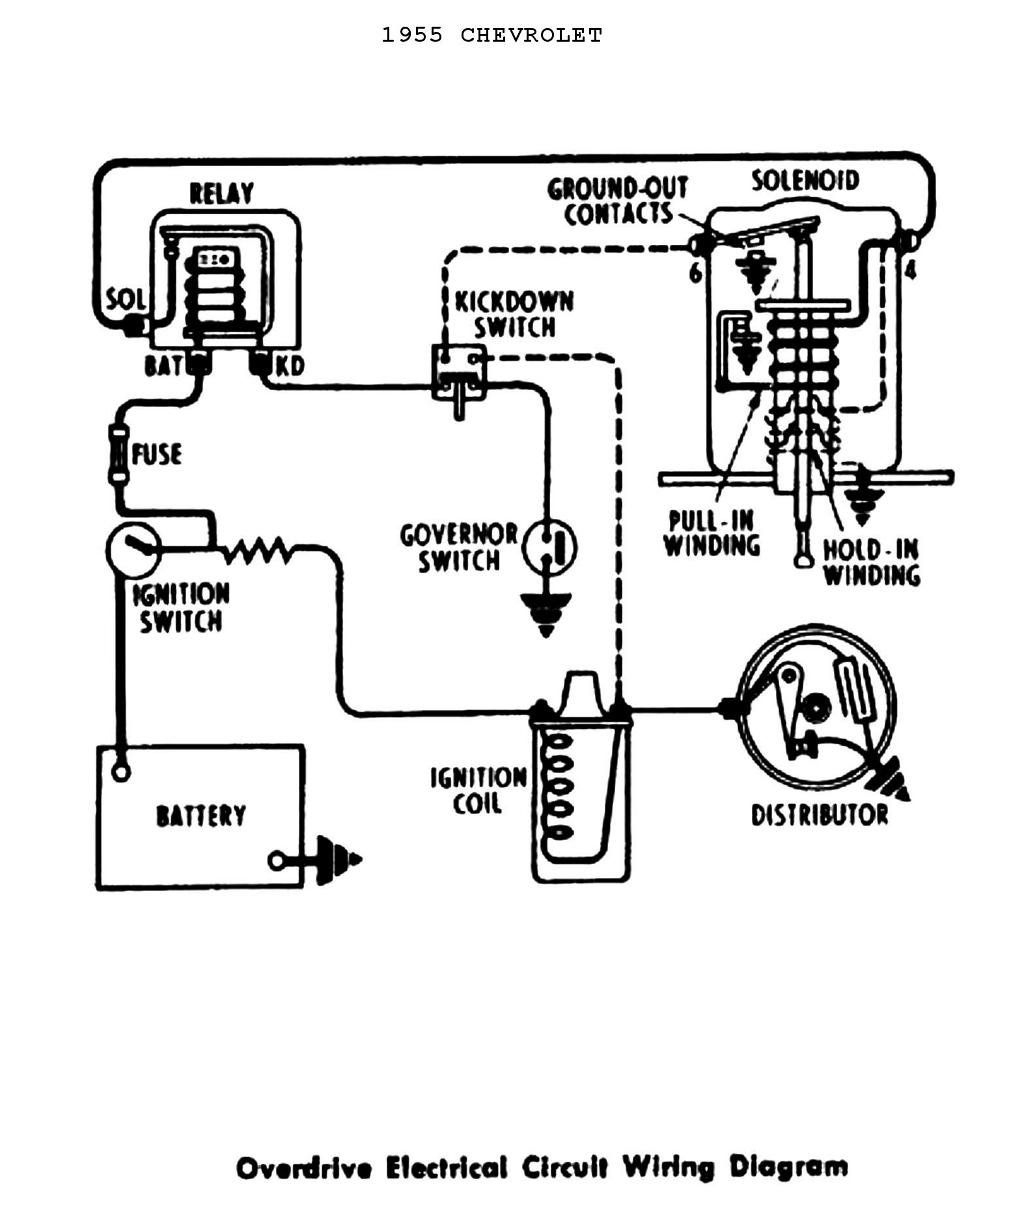 Tbi Ignition Coil Circuit Diagram - Schema Wiring Diagram - Ignition Coil Wiring Diagram